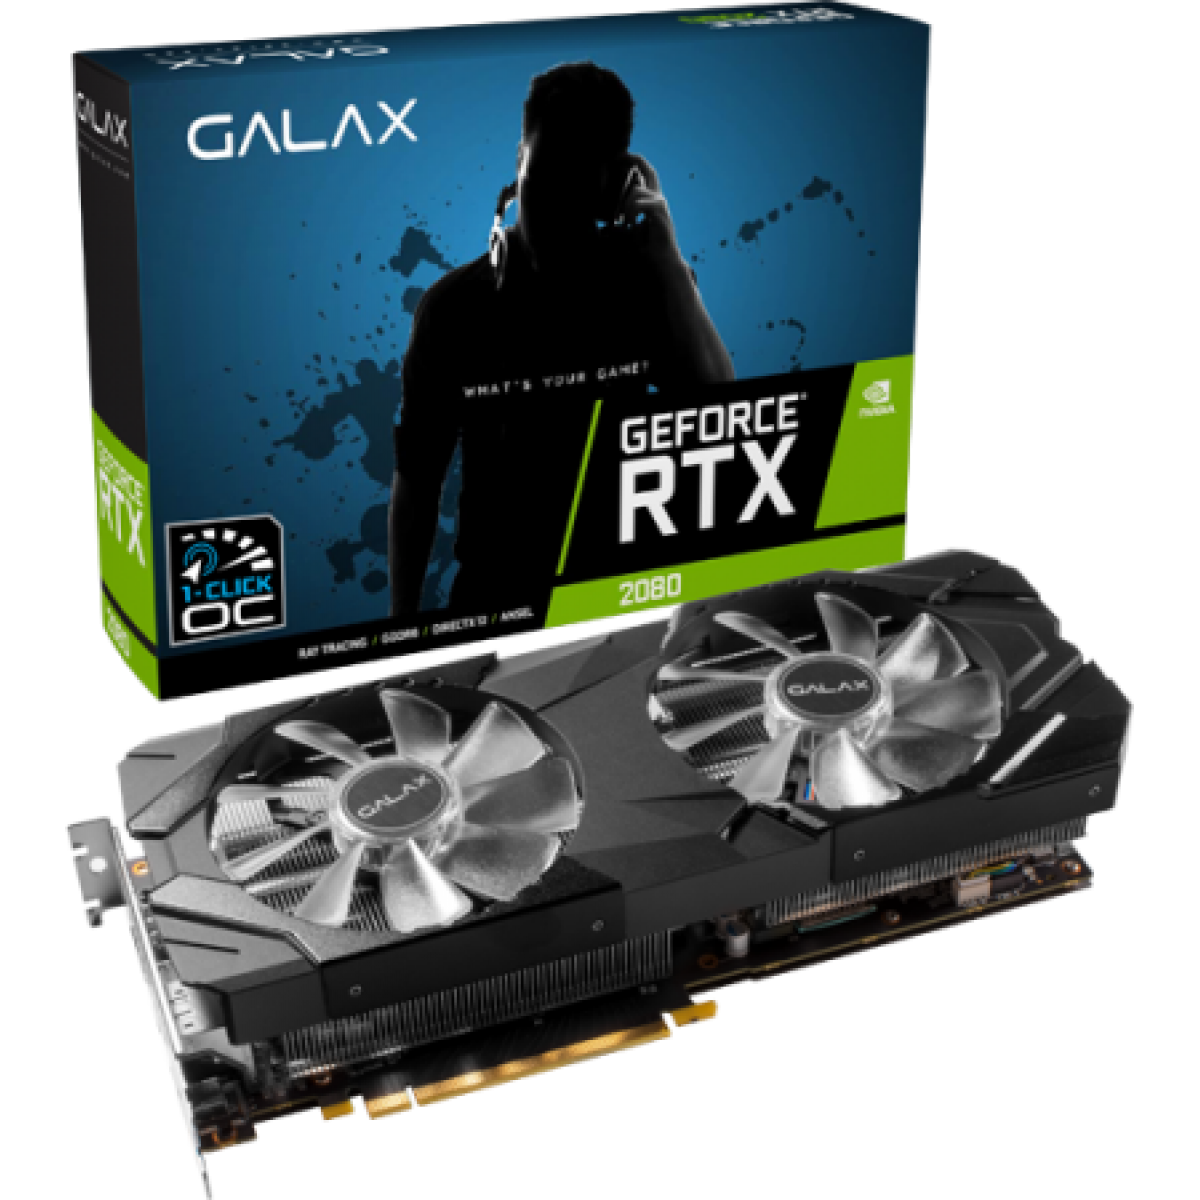 Placa de Vídeo Galax Geforce RTX 2080 EX (1-Click OC) Dual, 8GB GDDR6, 256Bit, 28NSL6MDU9E2